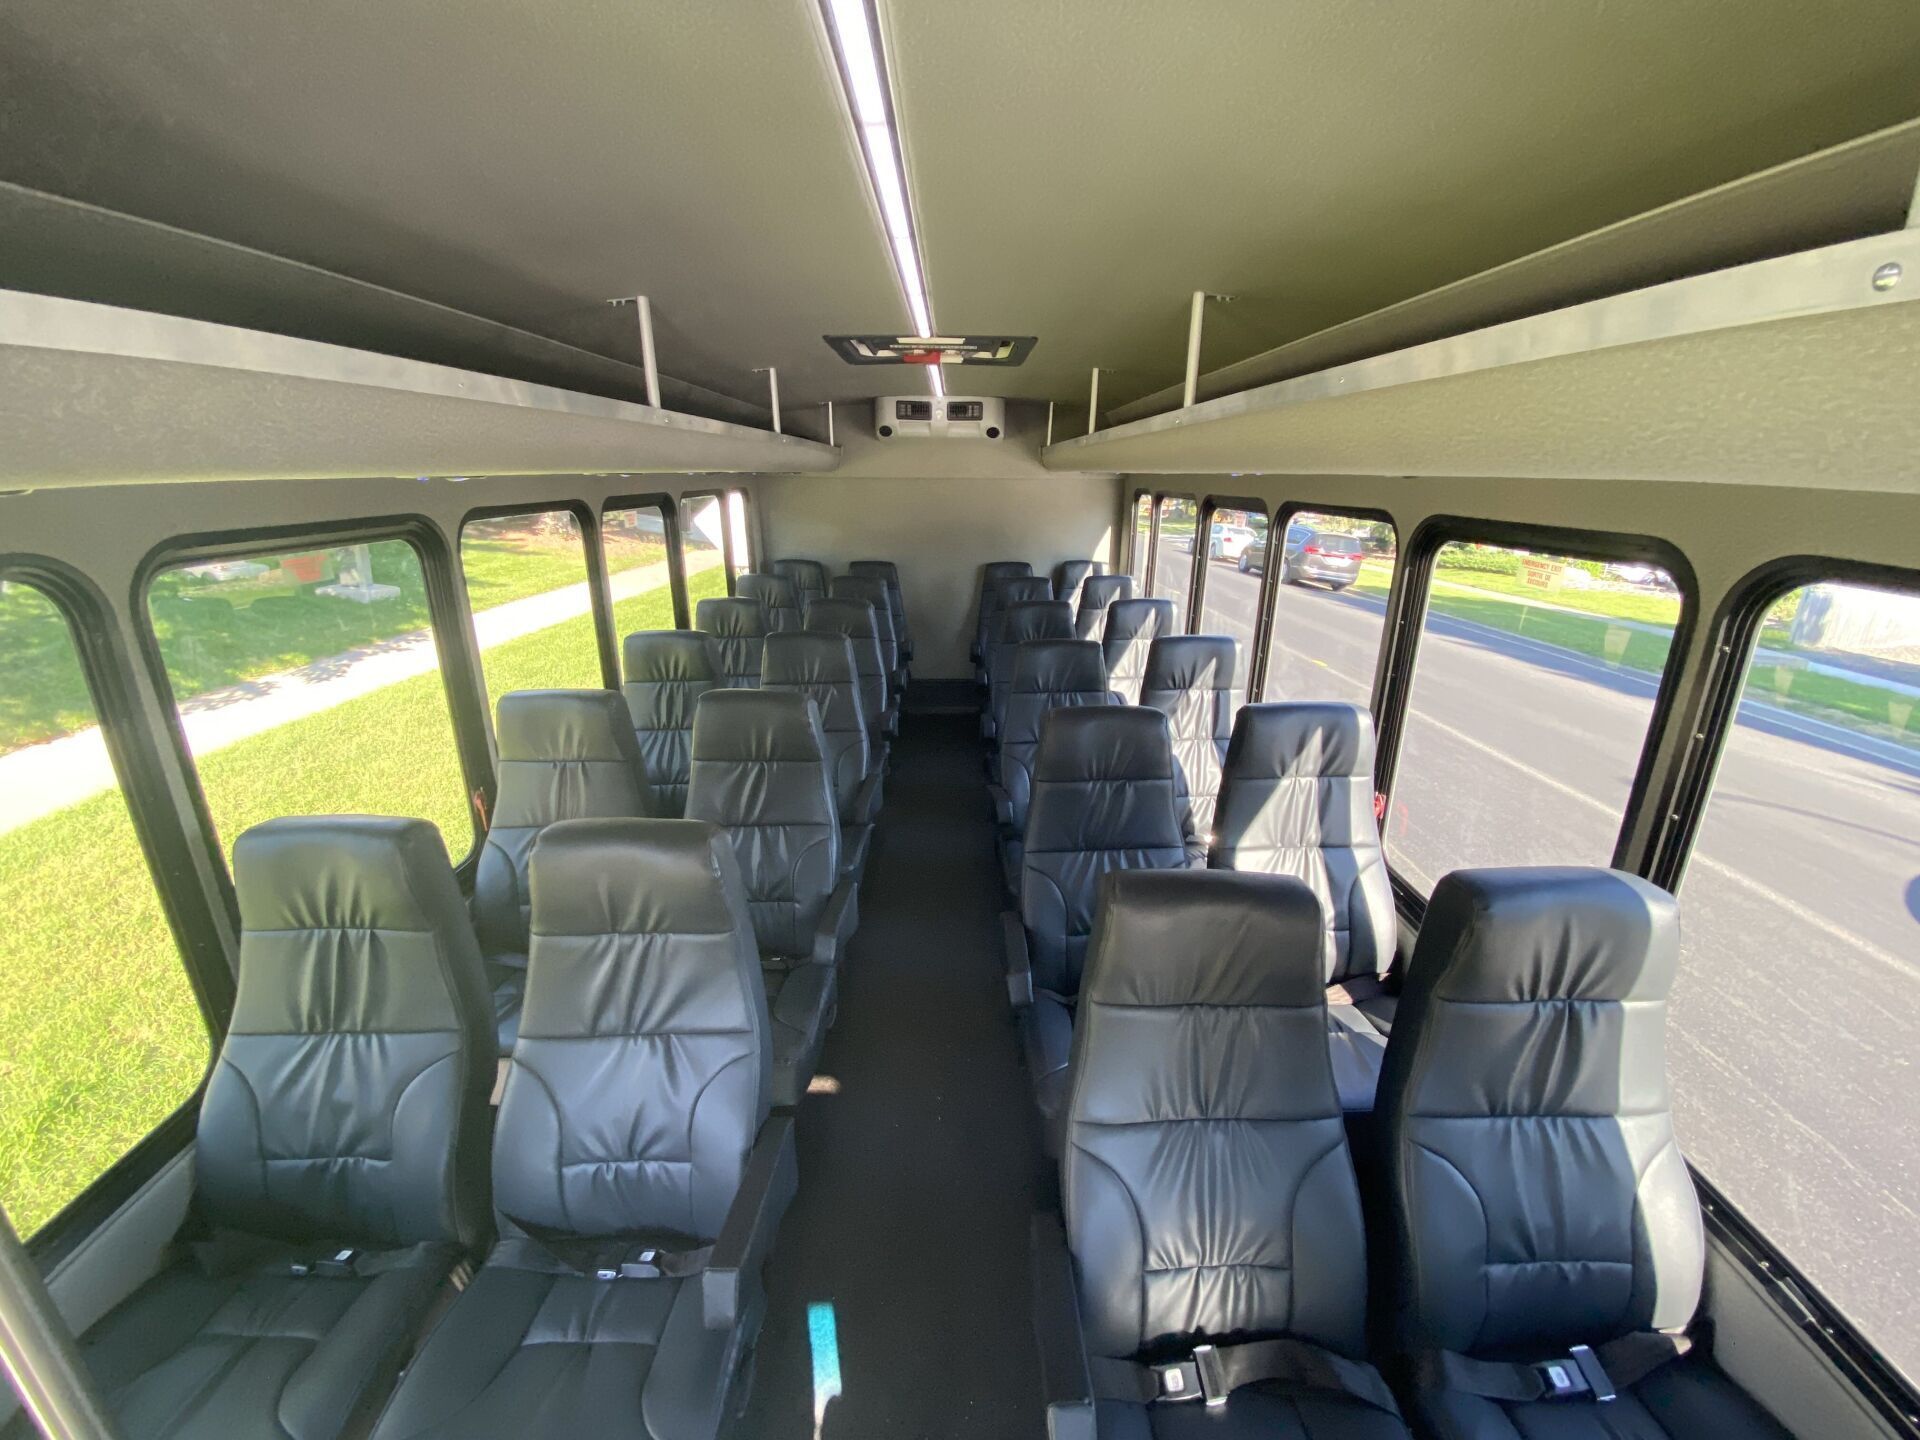 transit shuttle bus interior full seating